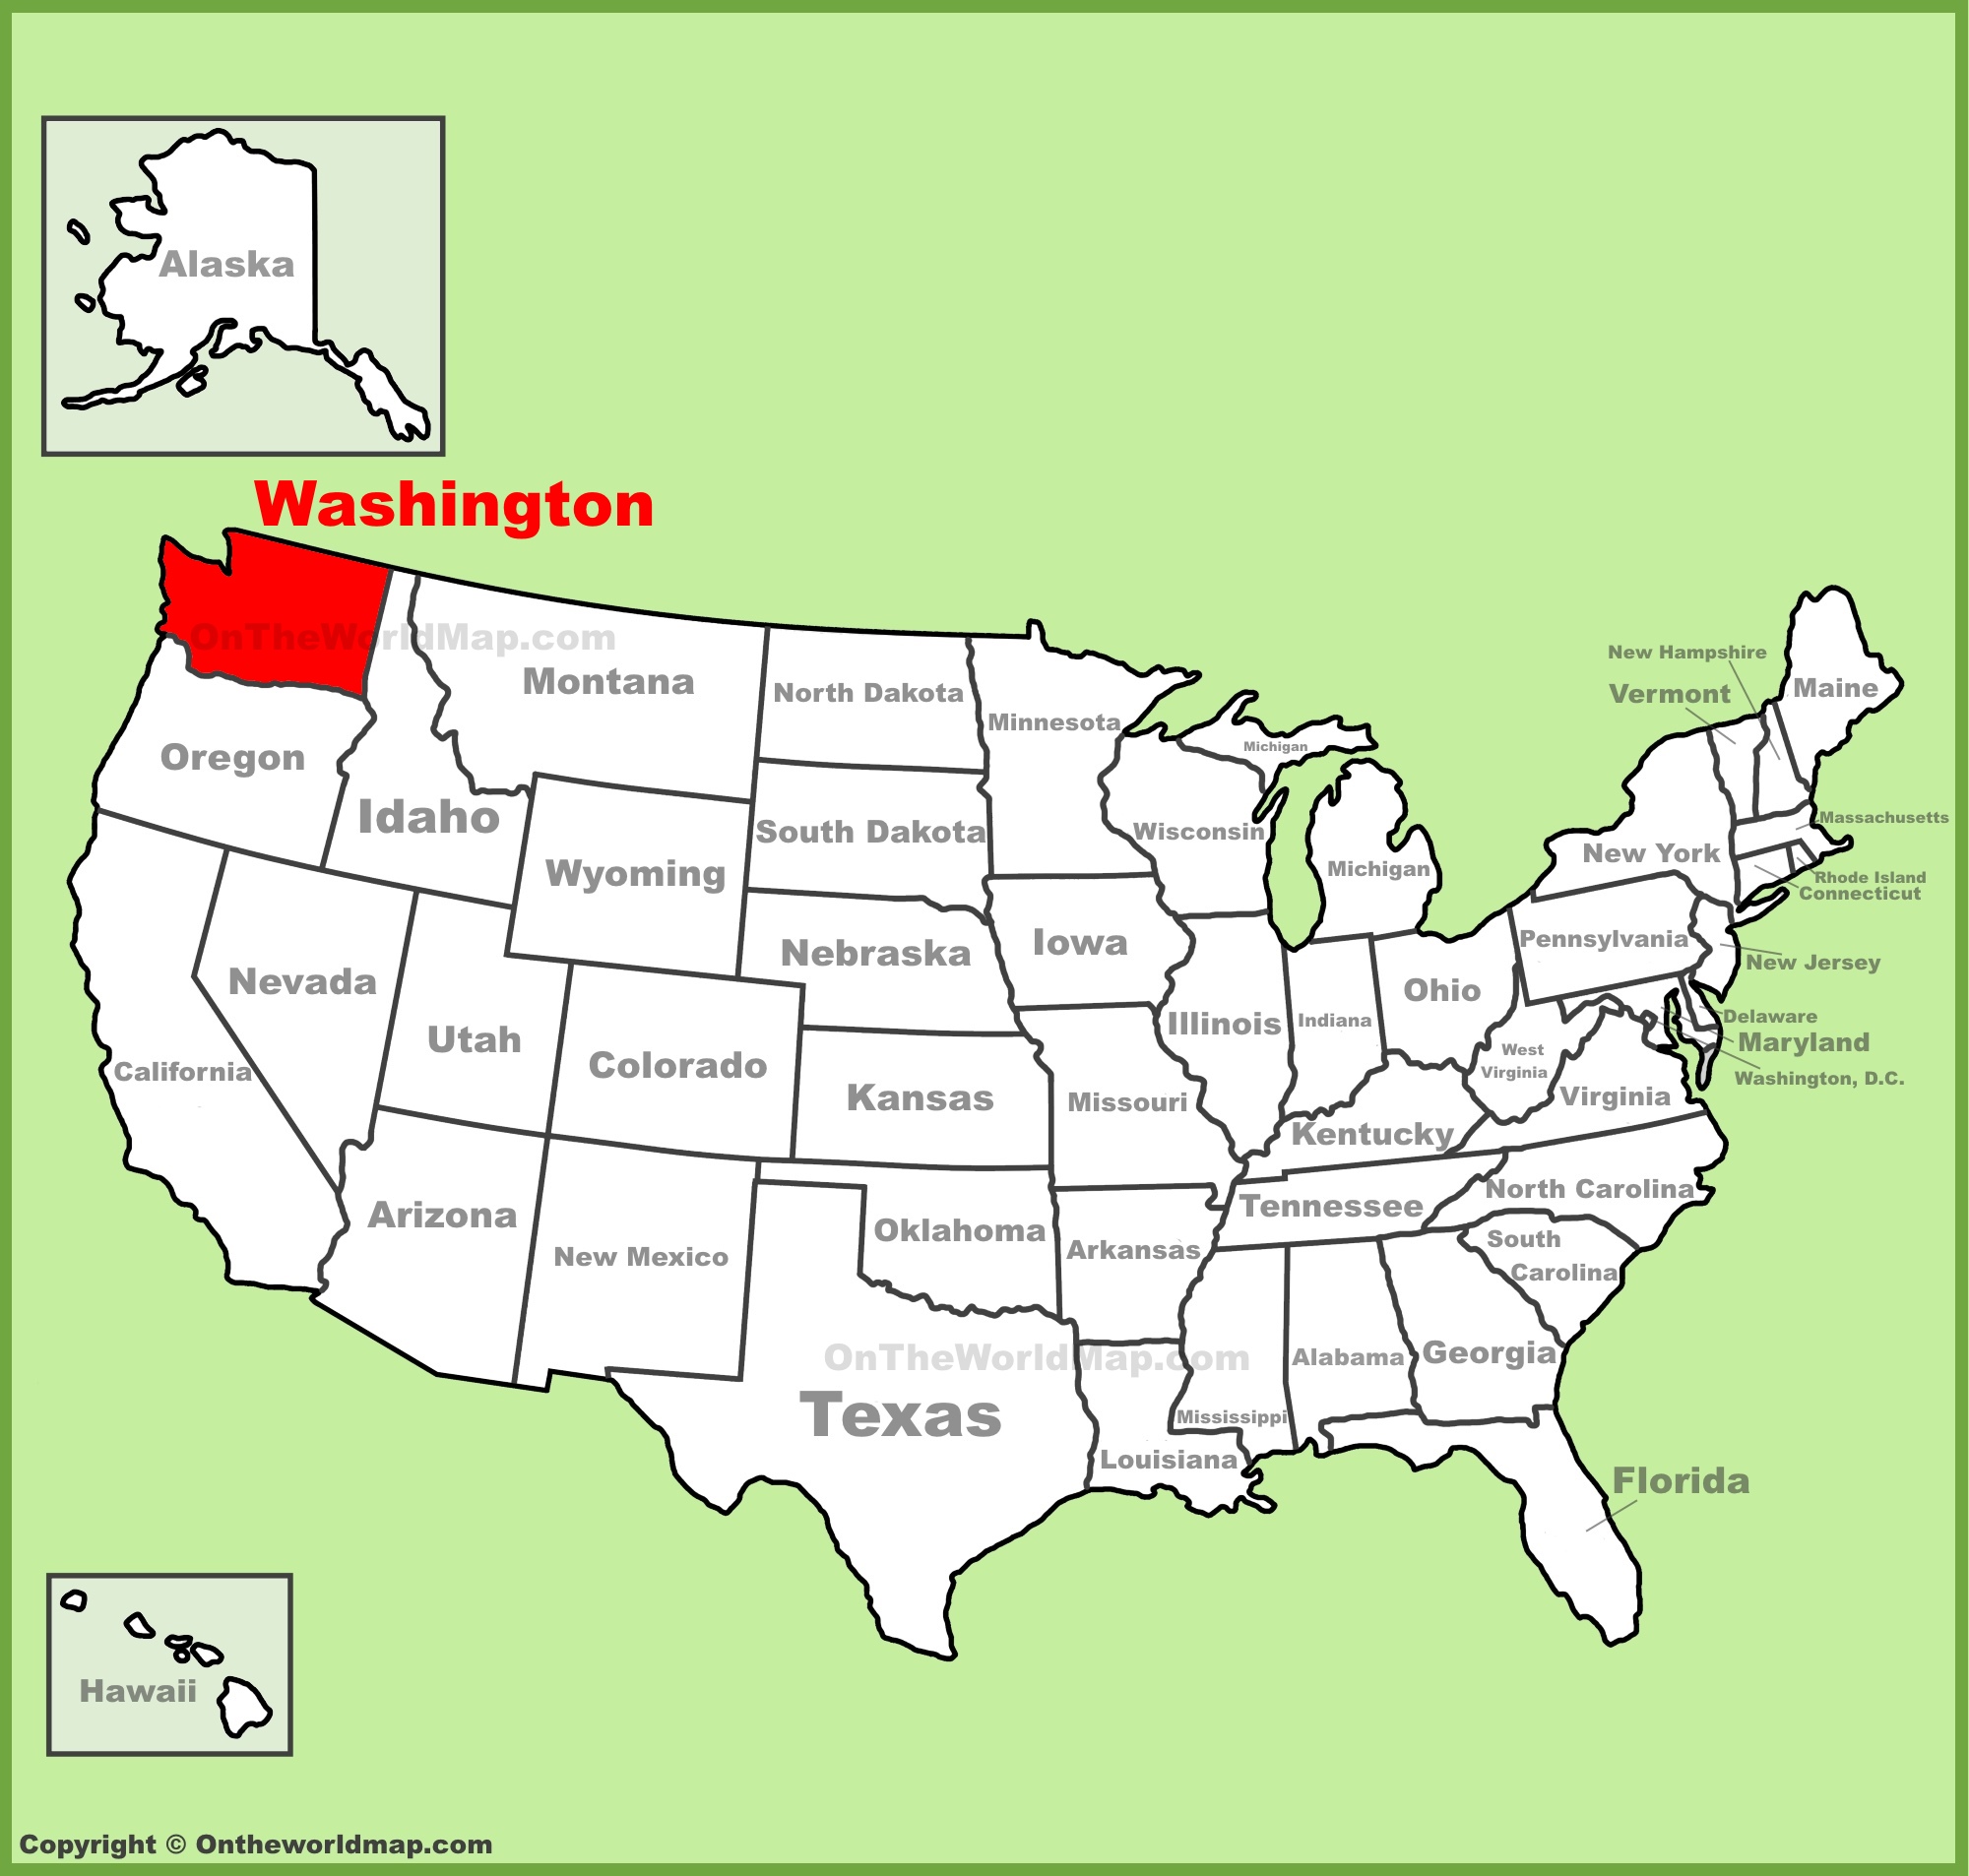 Washington State Location On The U S Map